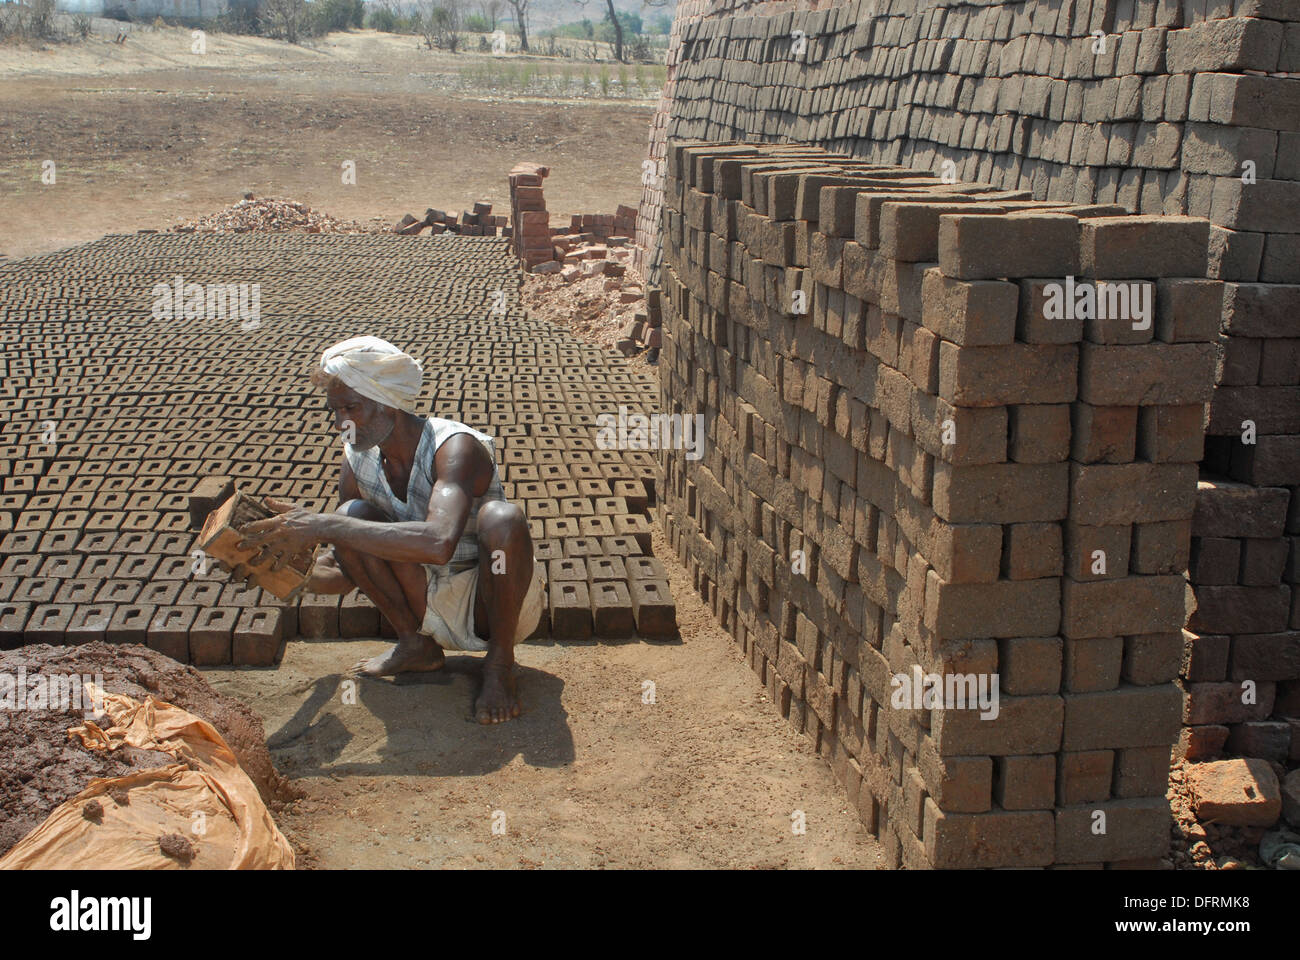 Bareli tribal man brick worker making bricks. Stock Photo